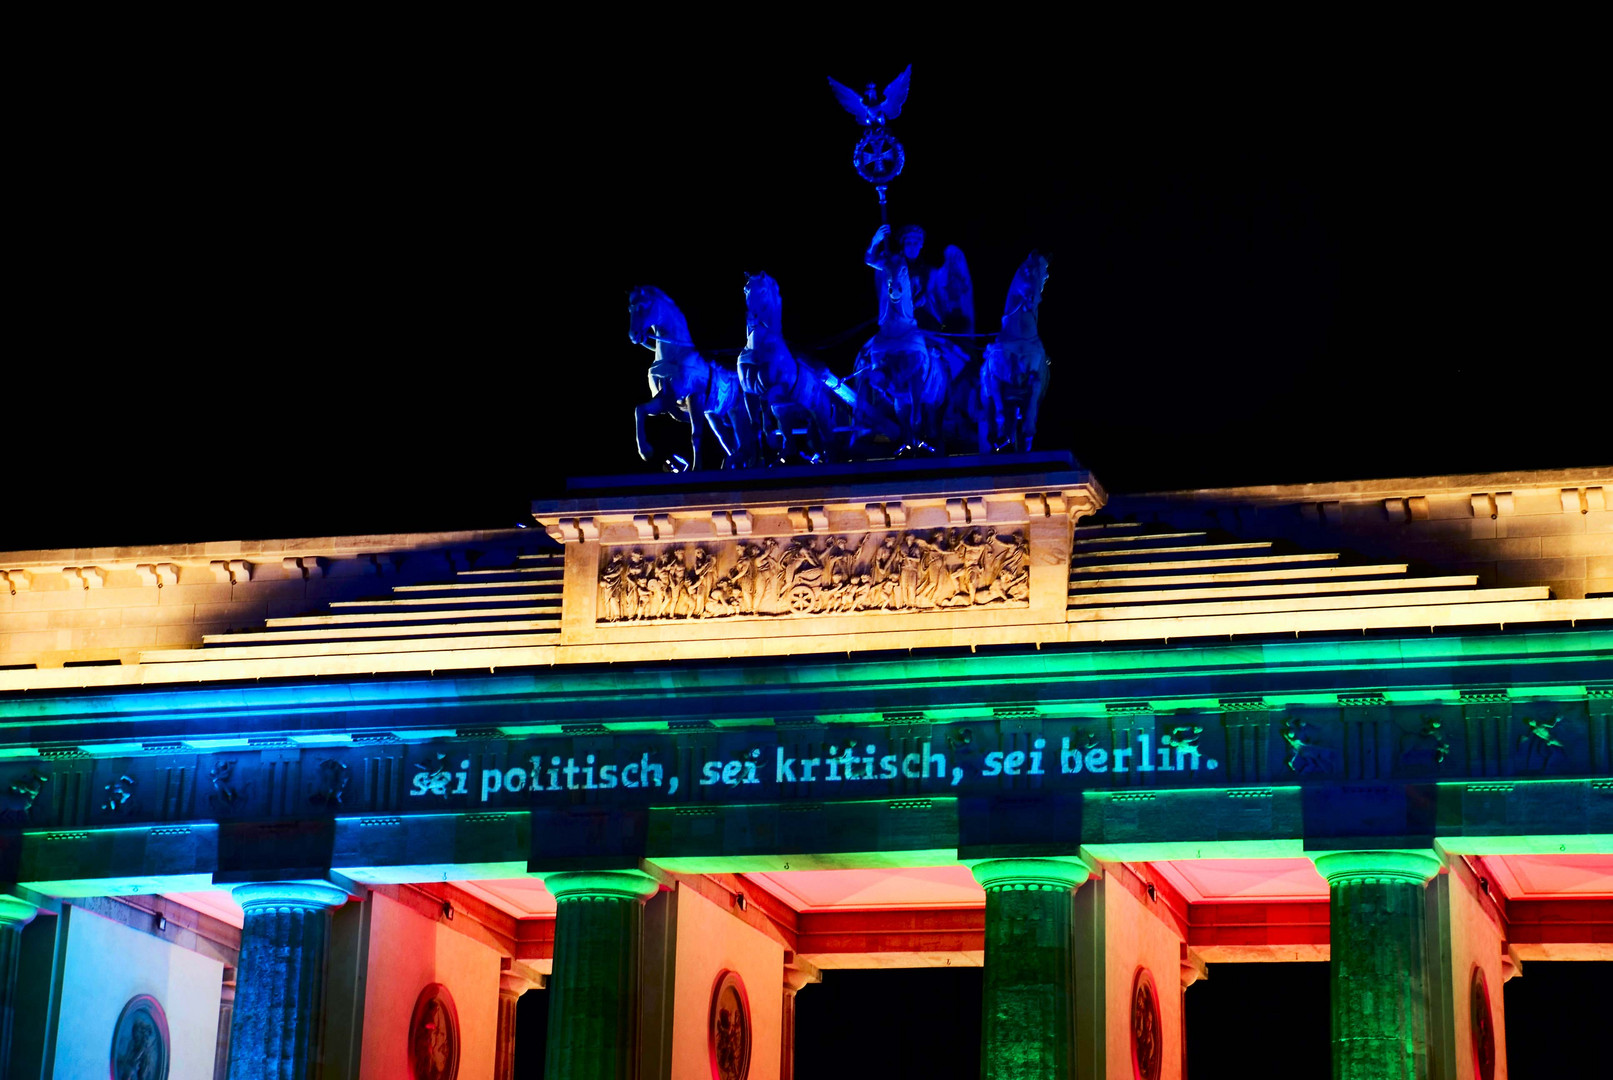 Night of the Light am Brandenburger Tor